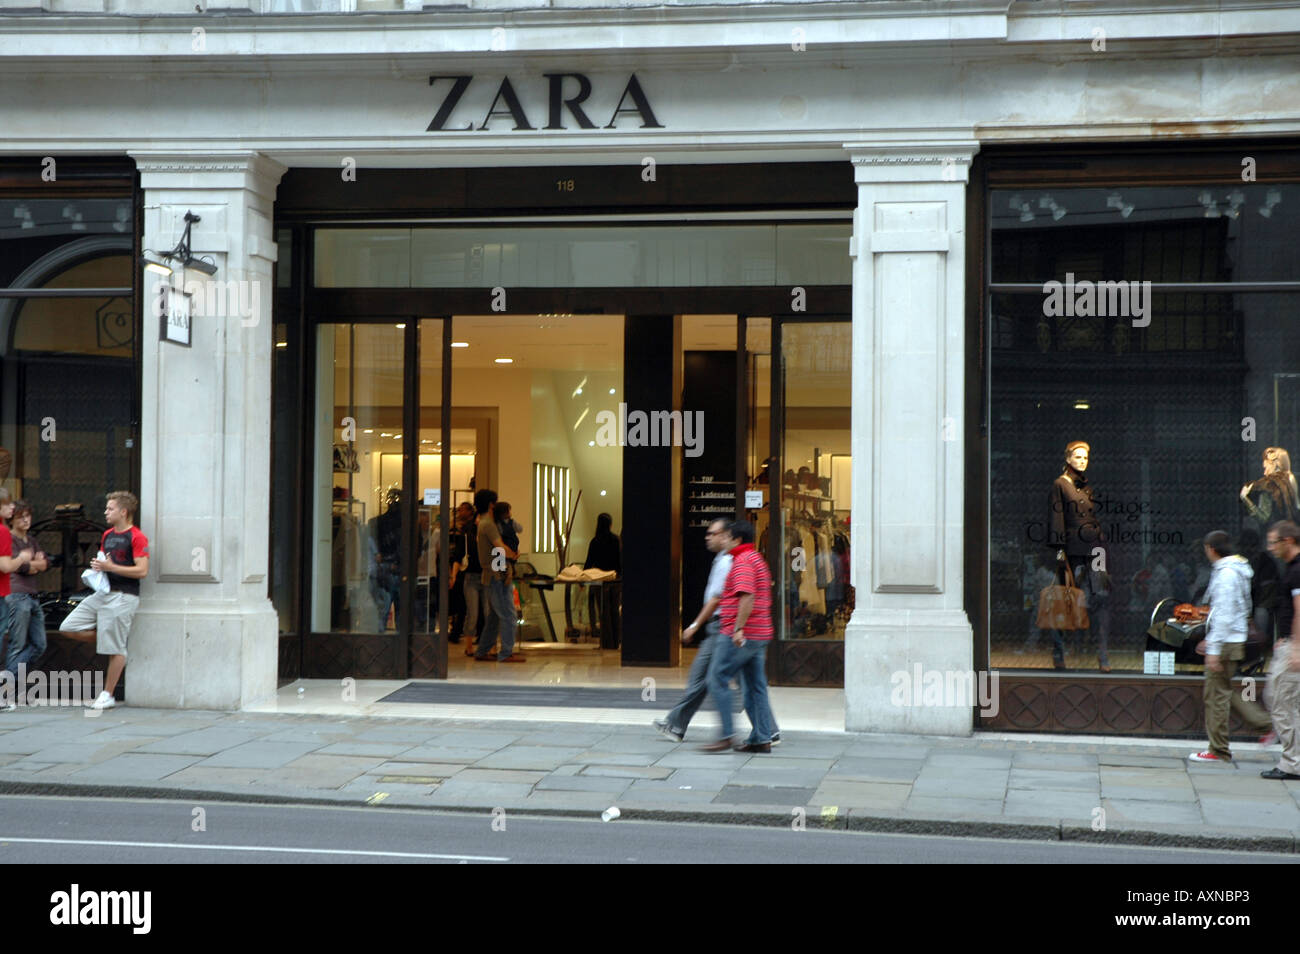 Zara shop at Regent Street in London, UK Stock Photo - Alamy